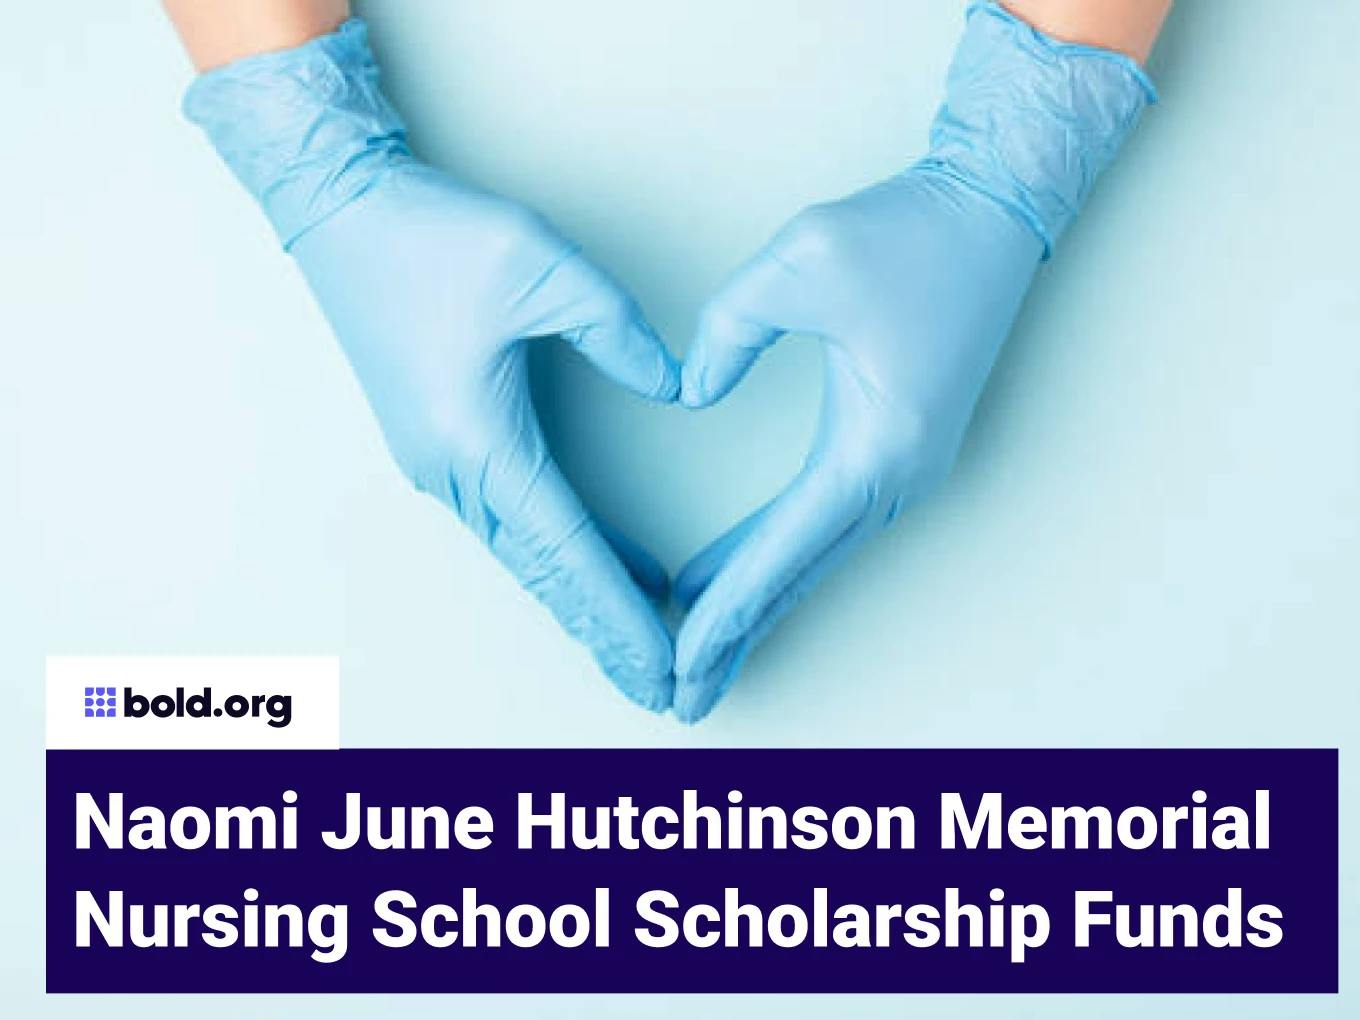 Naomi June Hutchinson Memorial Nursing School Scholarship Fund